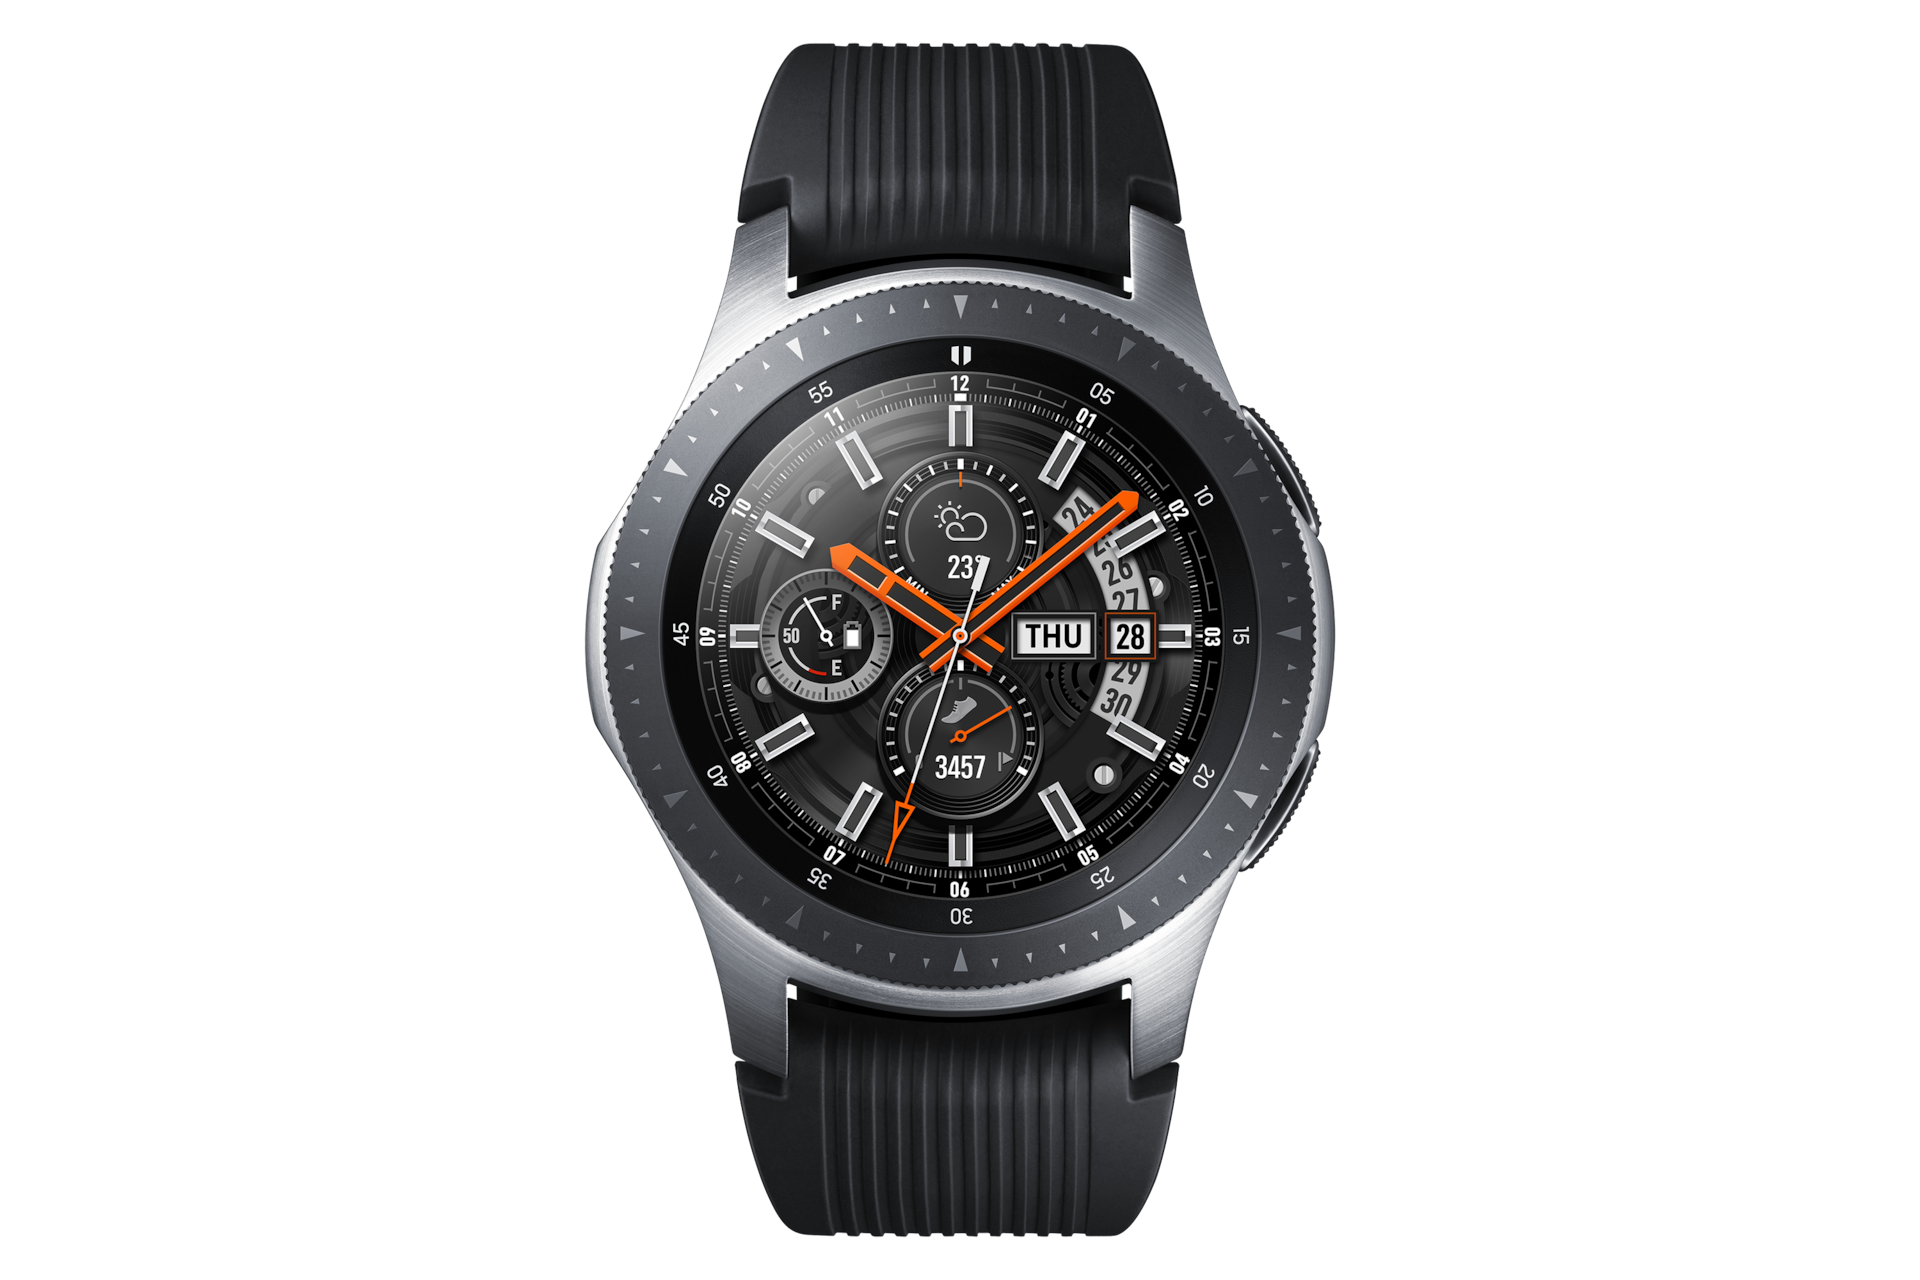 samsung new smartwatch 2019 price